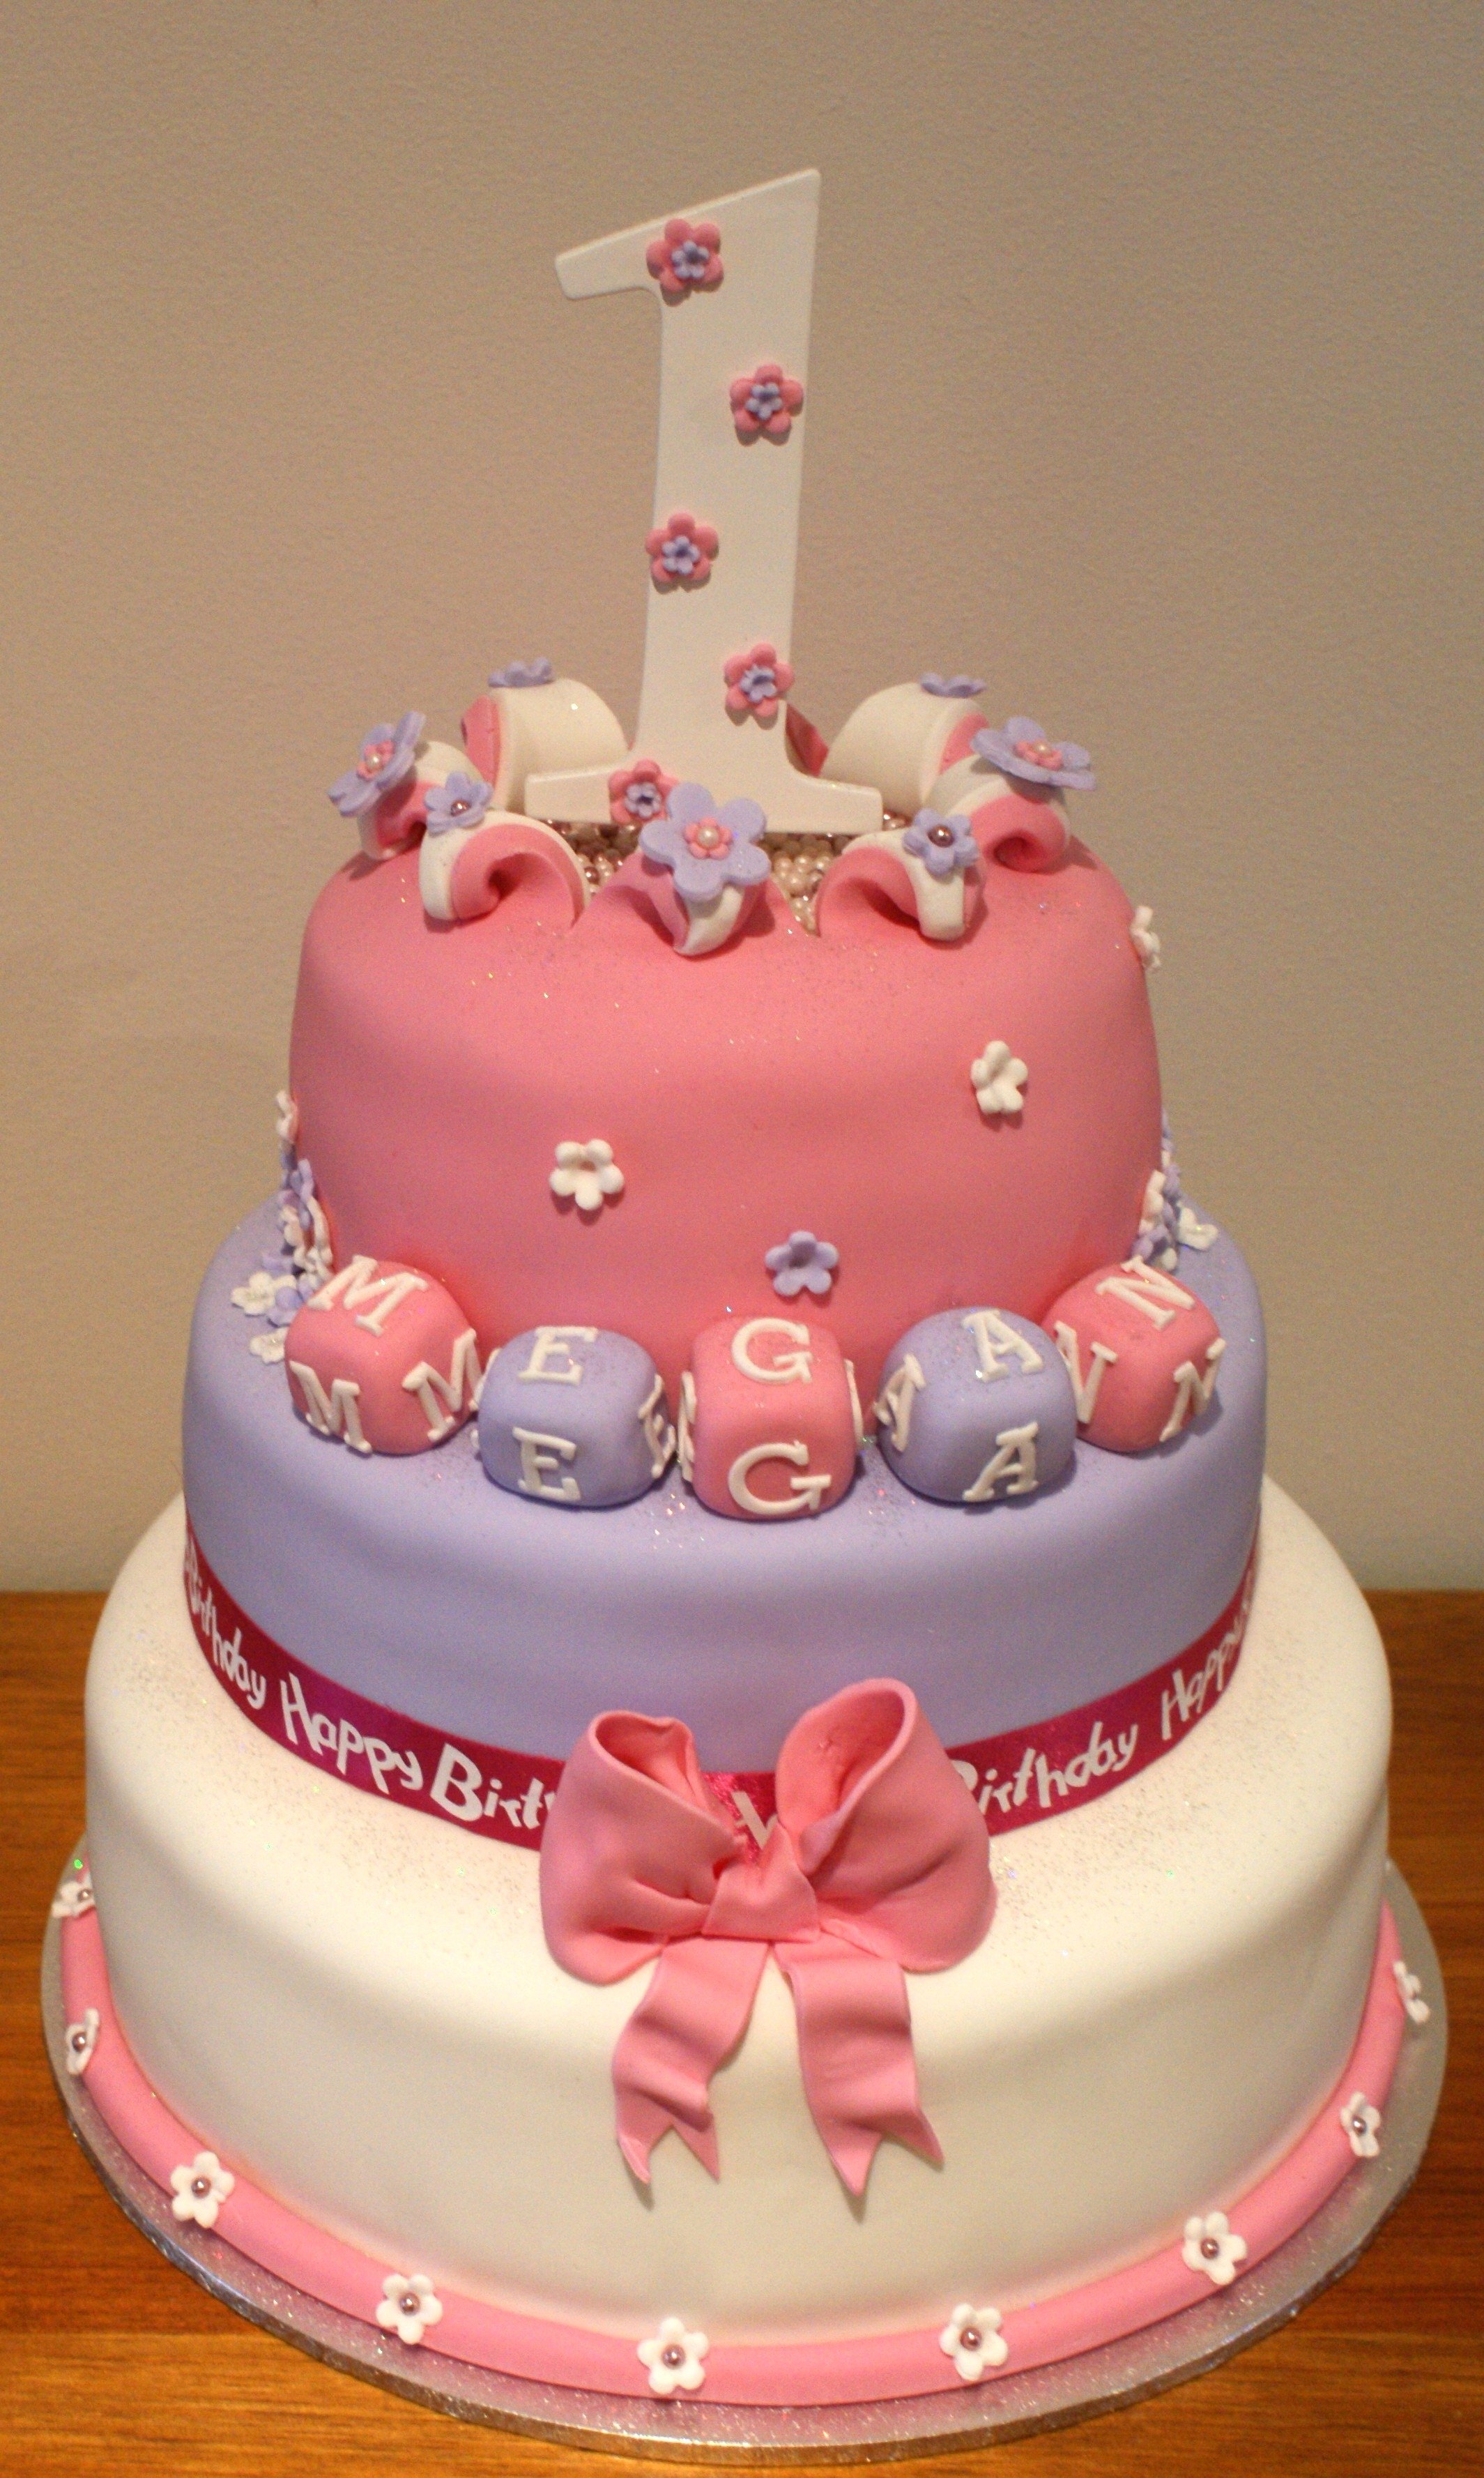 10 Amazing Little Girl Birthday Cake Ideas little girl birthday cakes new reviews about number 1 birthday cake 2022